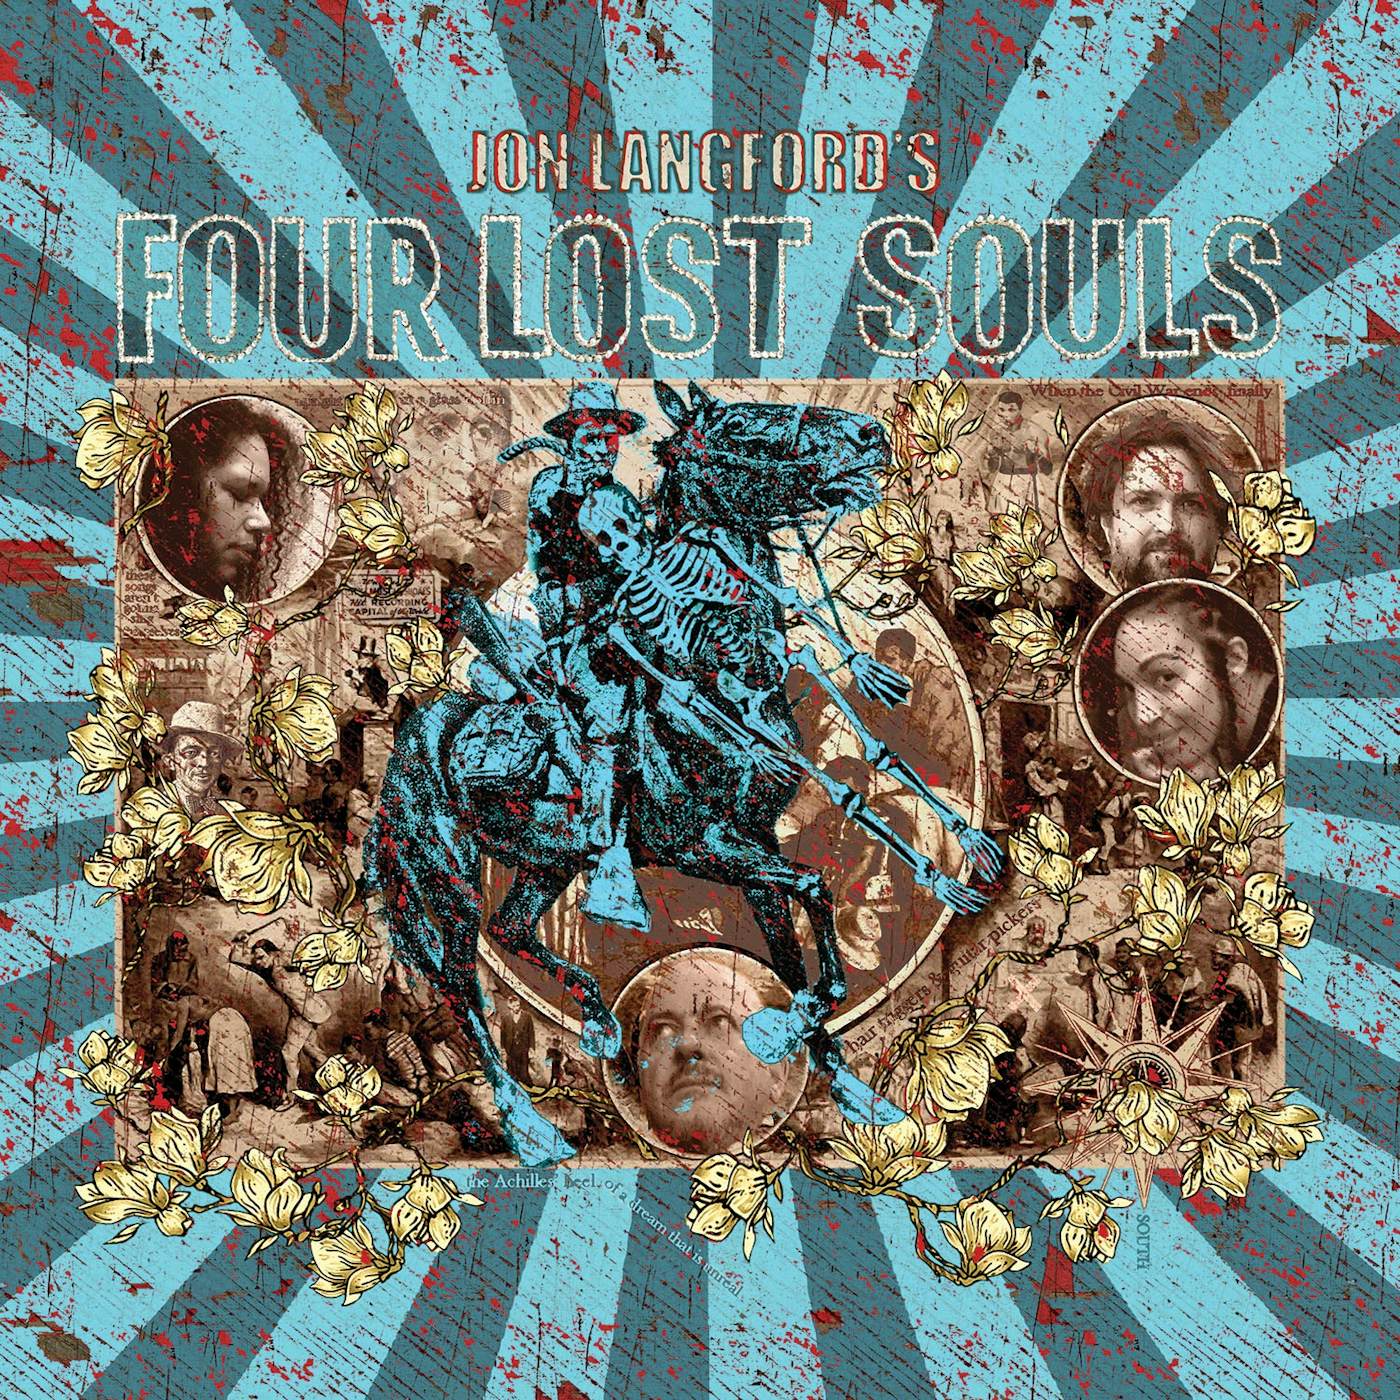 Jon Langford Four Lost Souls Vinyl Record